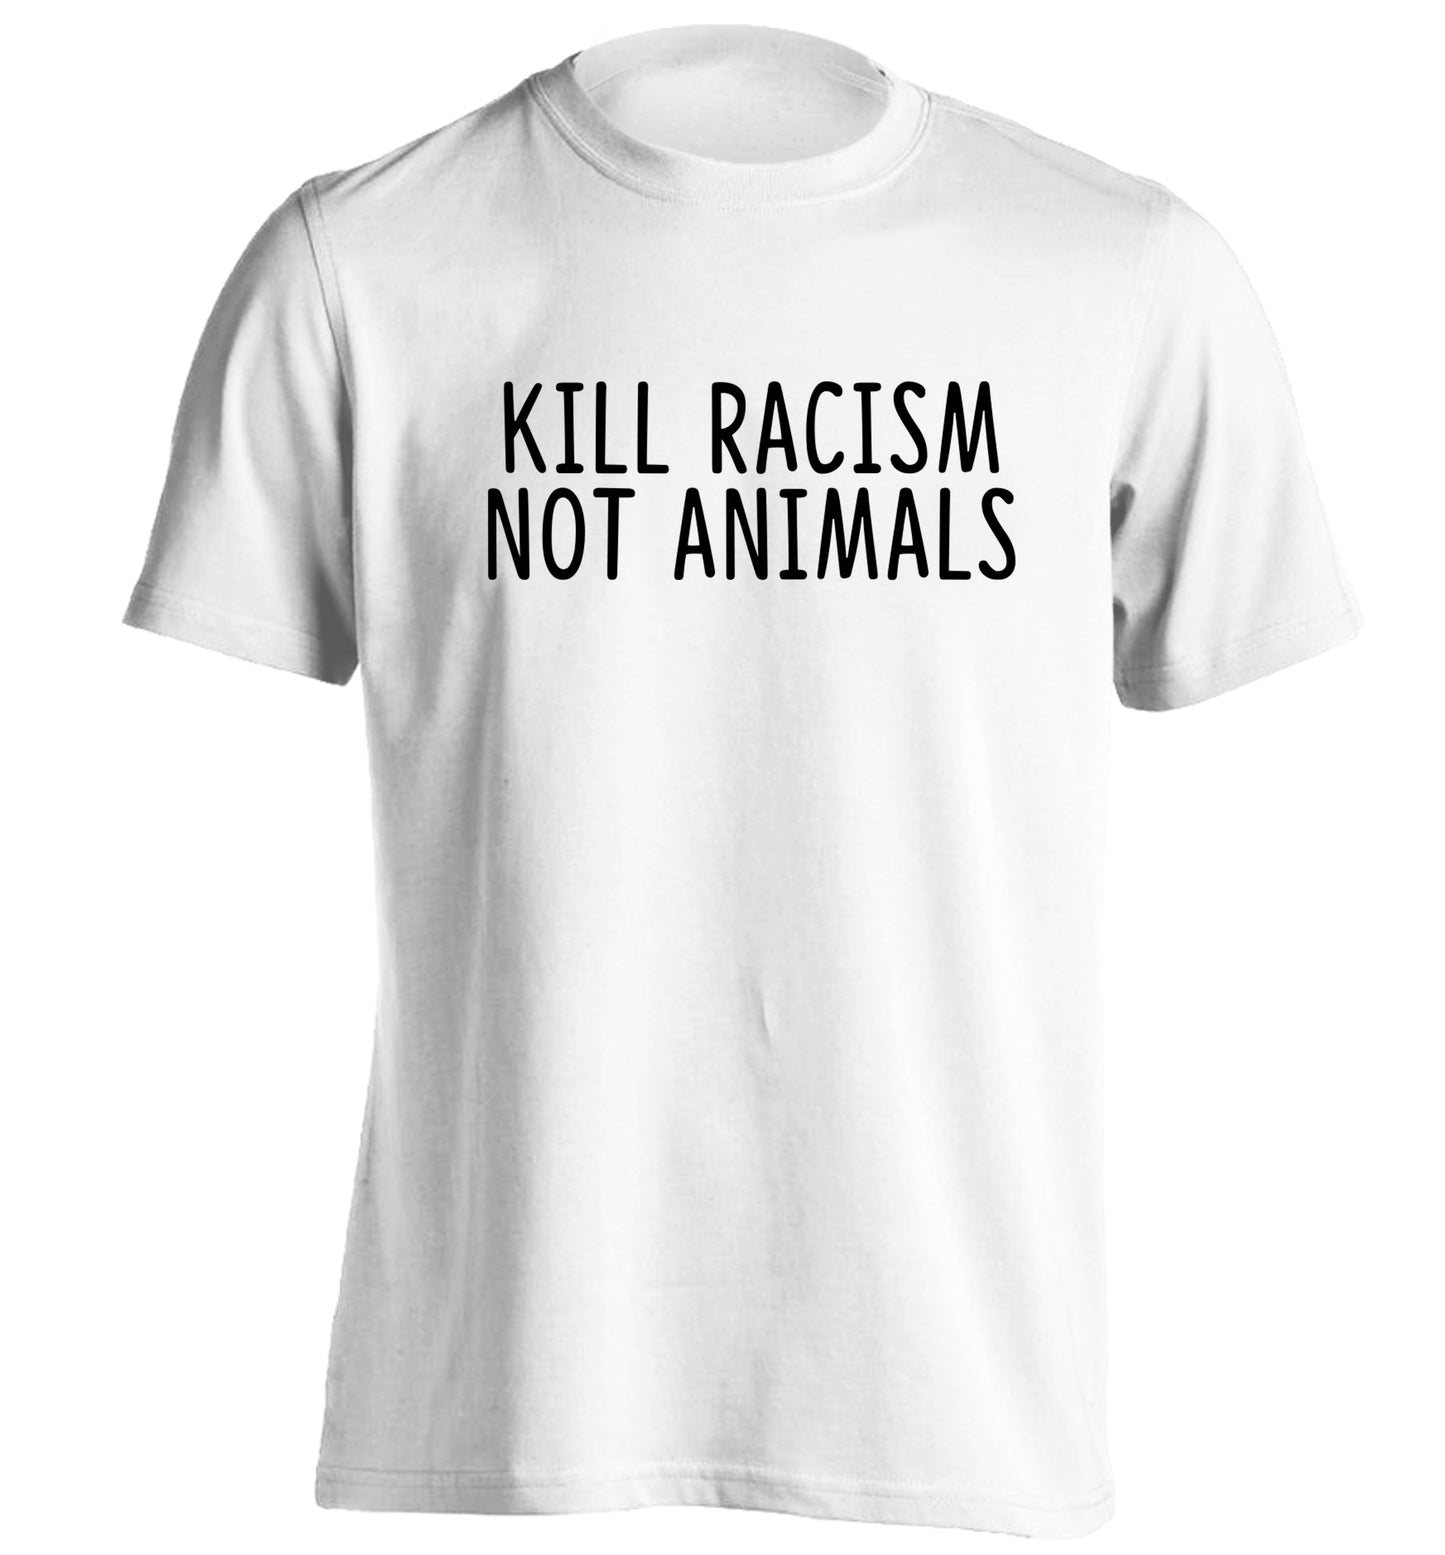 Kill Racism Not Animals adults unisex white Tshirt 2XL